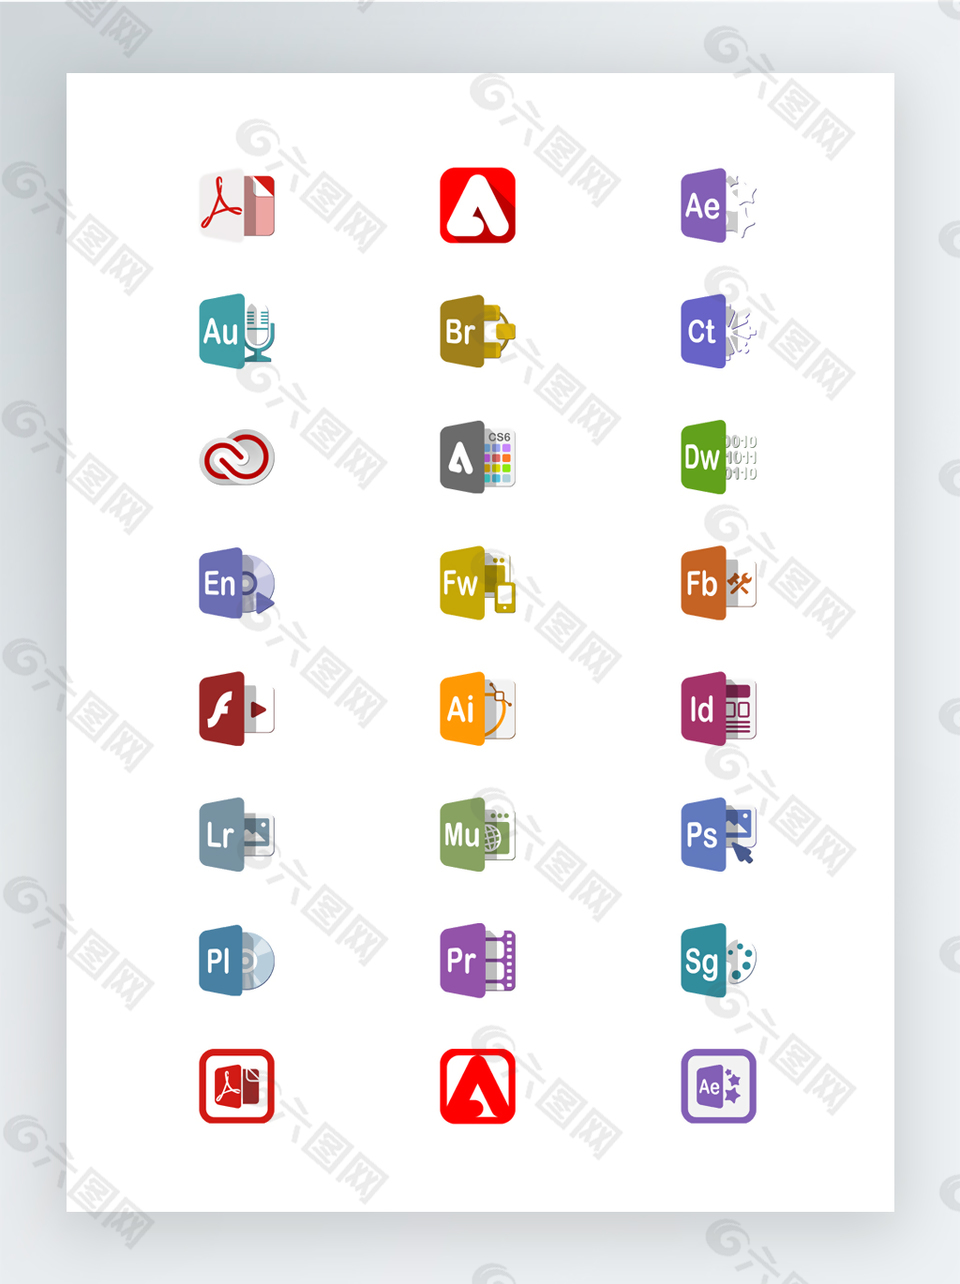 AdobeCS6产品图标